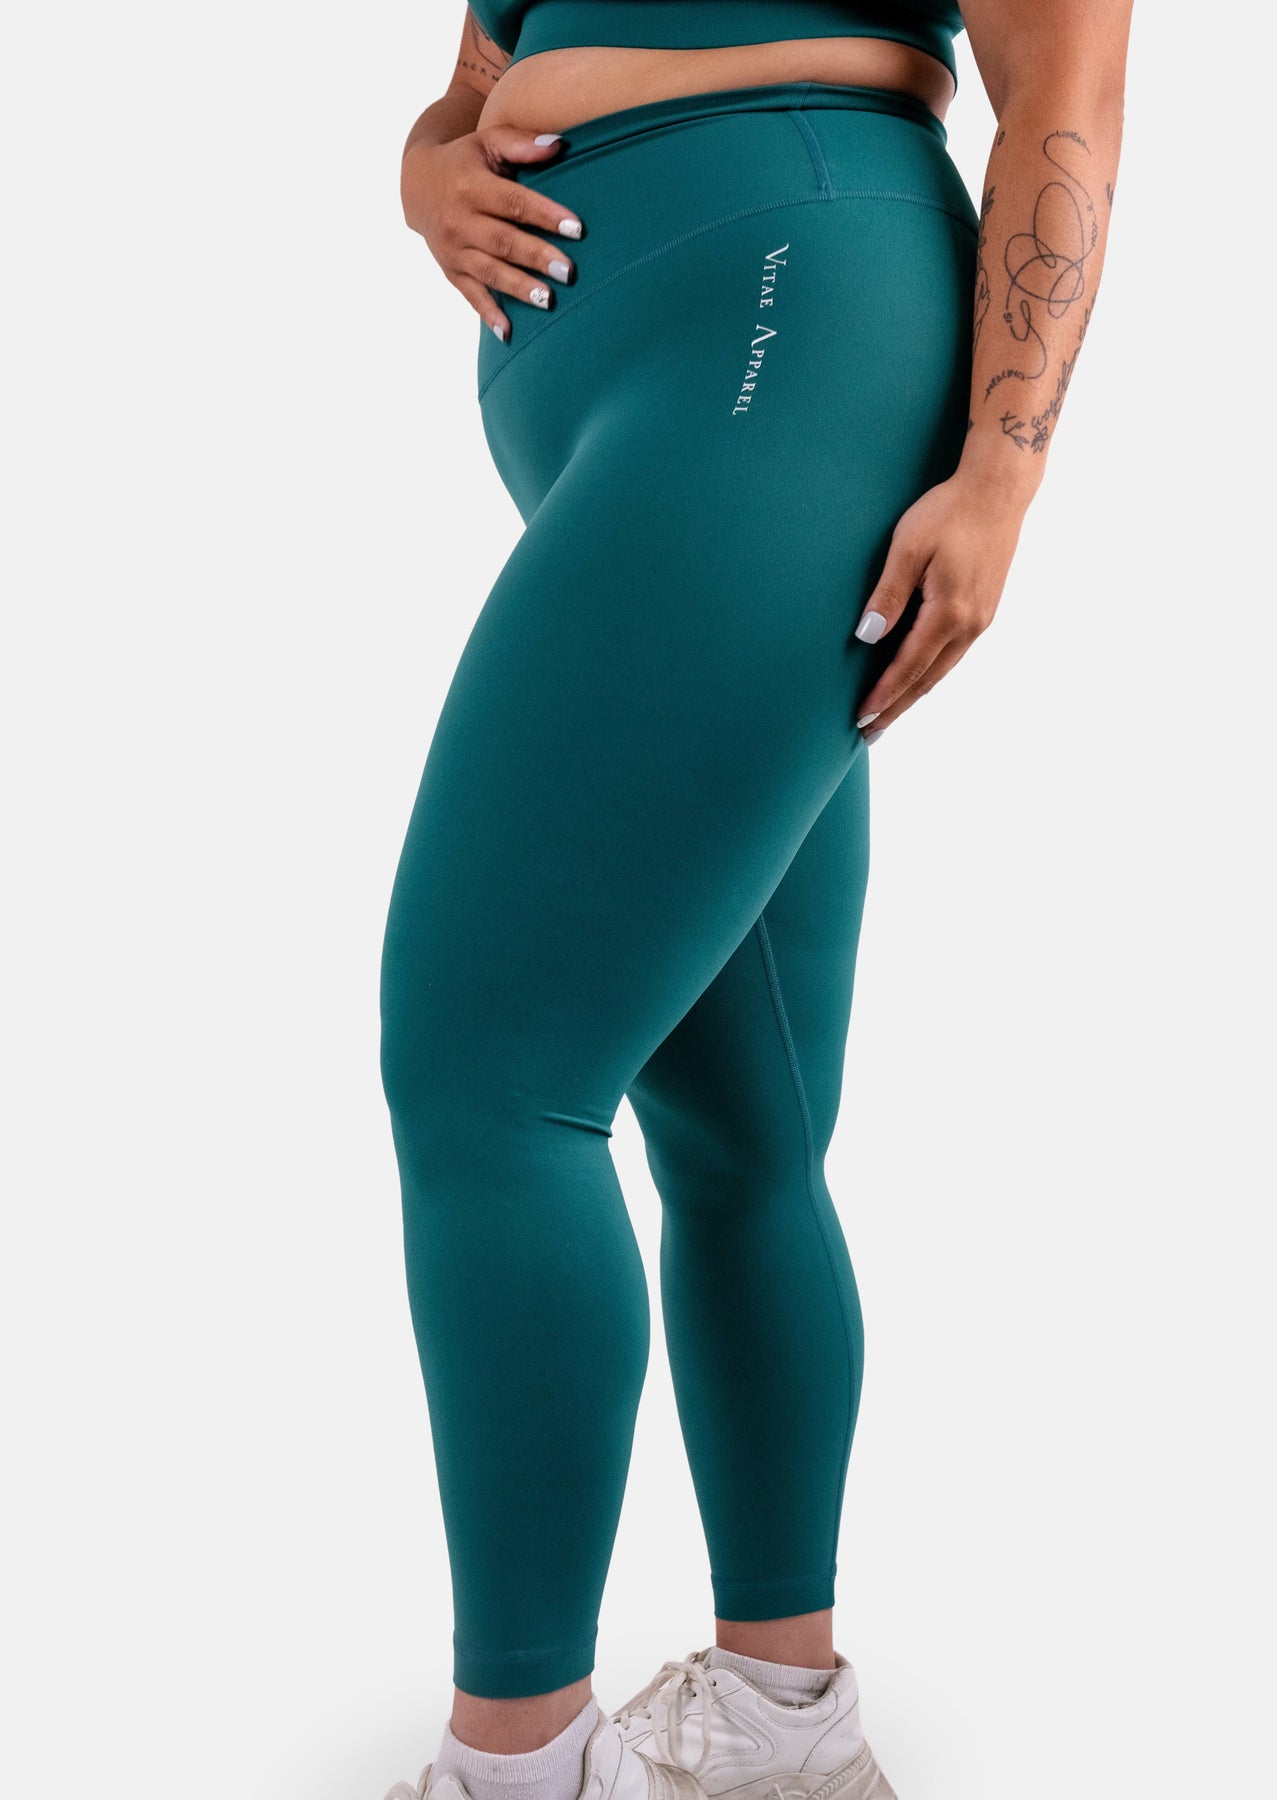 Shefit Green Crossover Waist Green Seamless Workout Pants Size Medium - $28  - From Madi